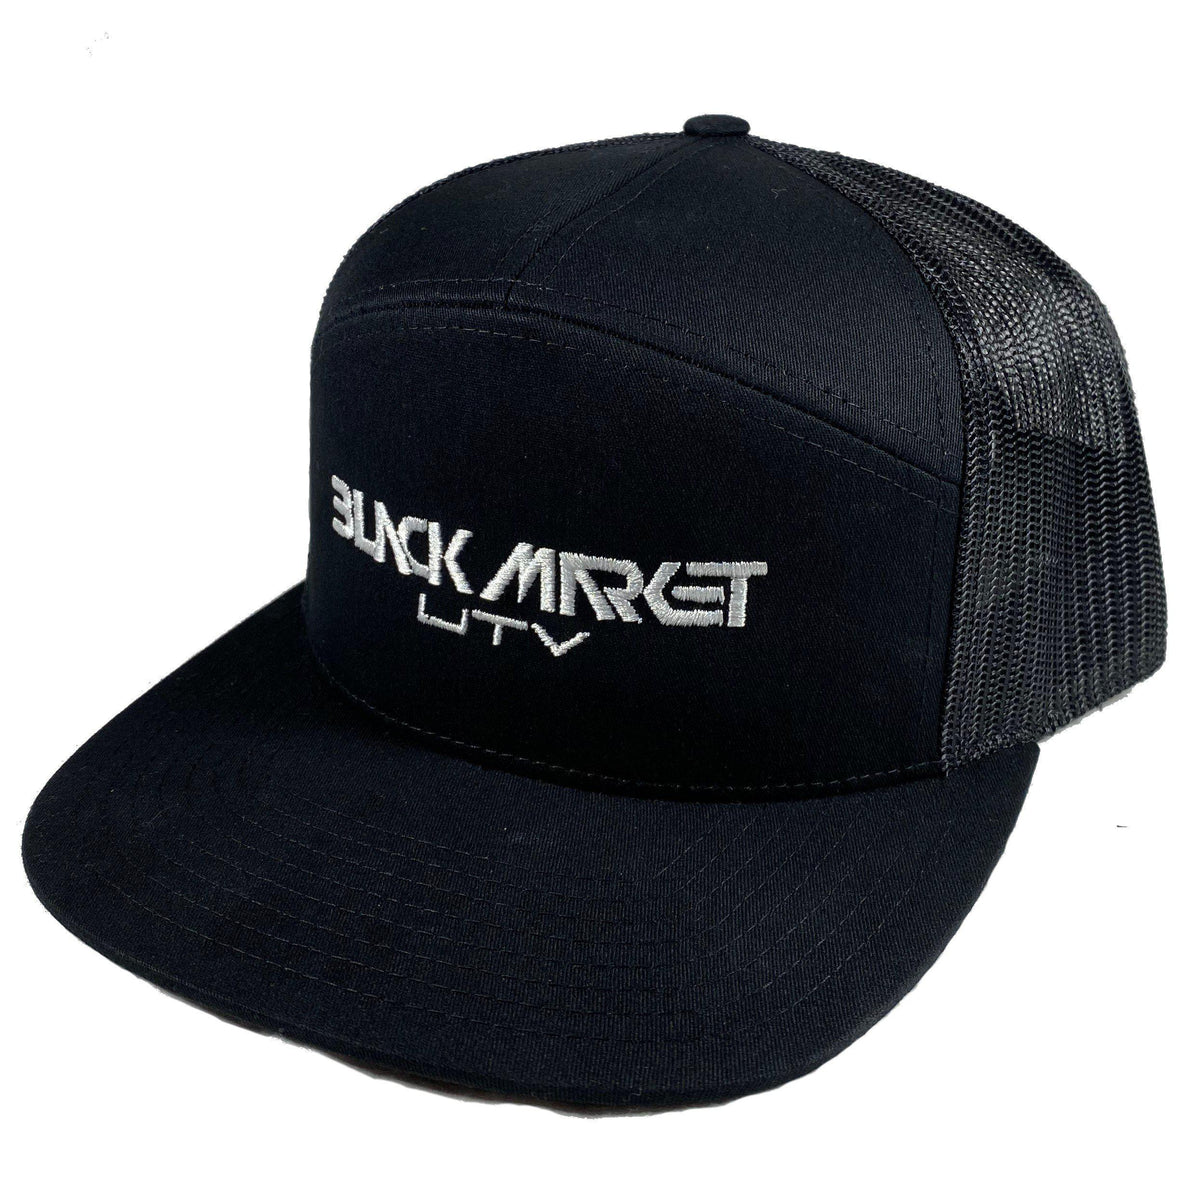 Black Market UTV - 7 Panel Flat Bill Snap Back Trucker Hats-Hats-Black Market UTV-All Black-Black Market UTV